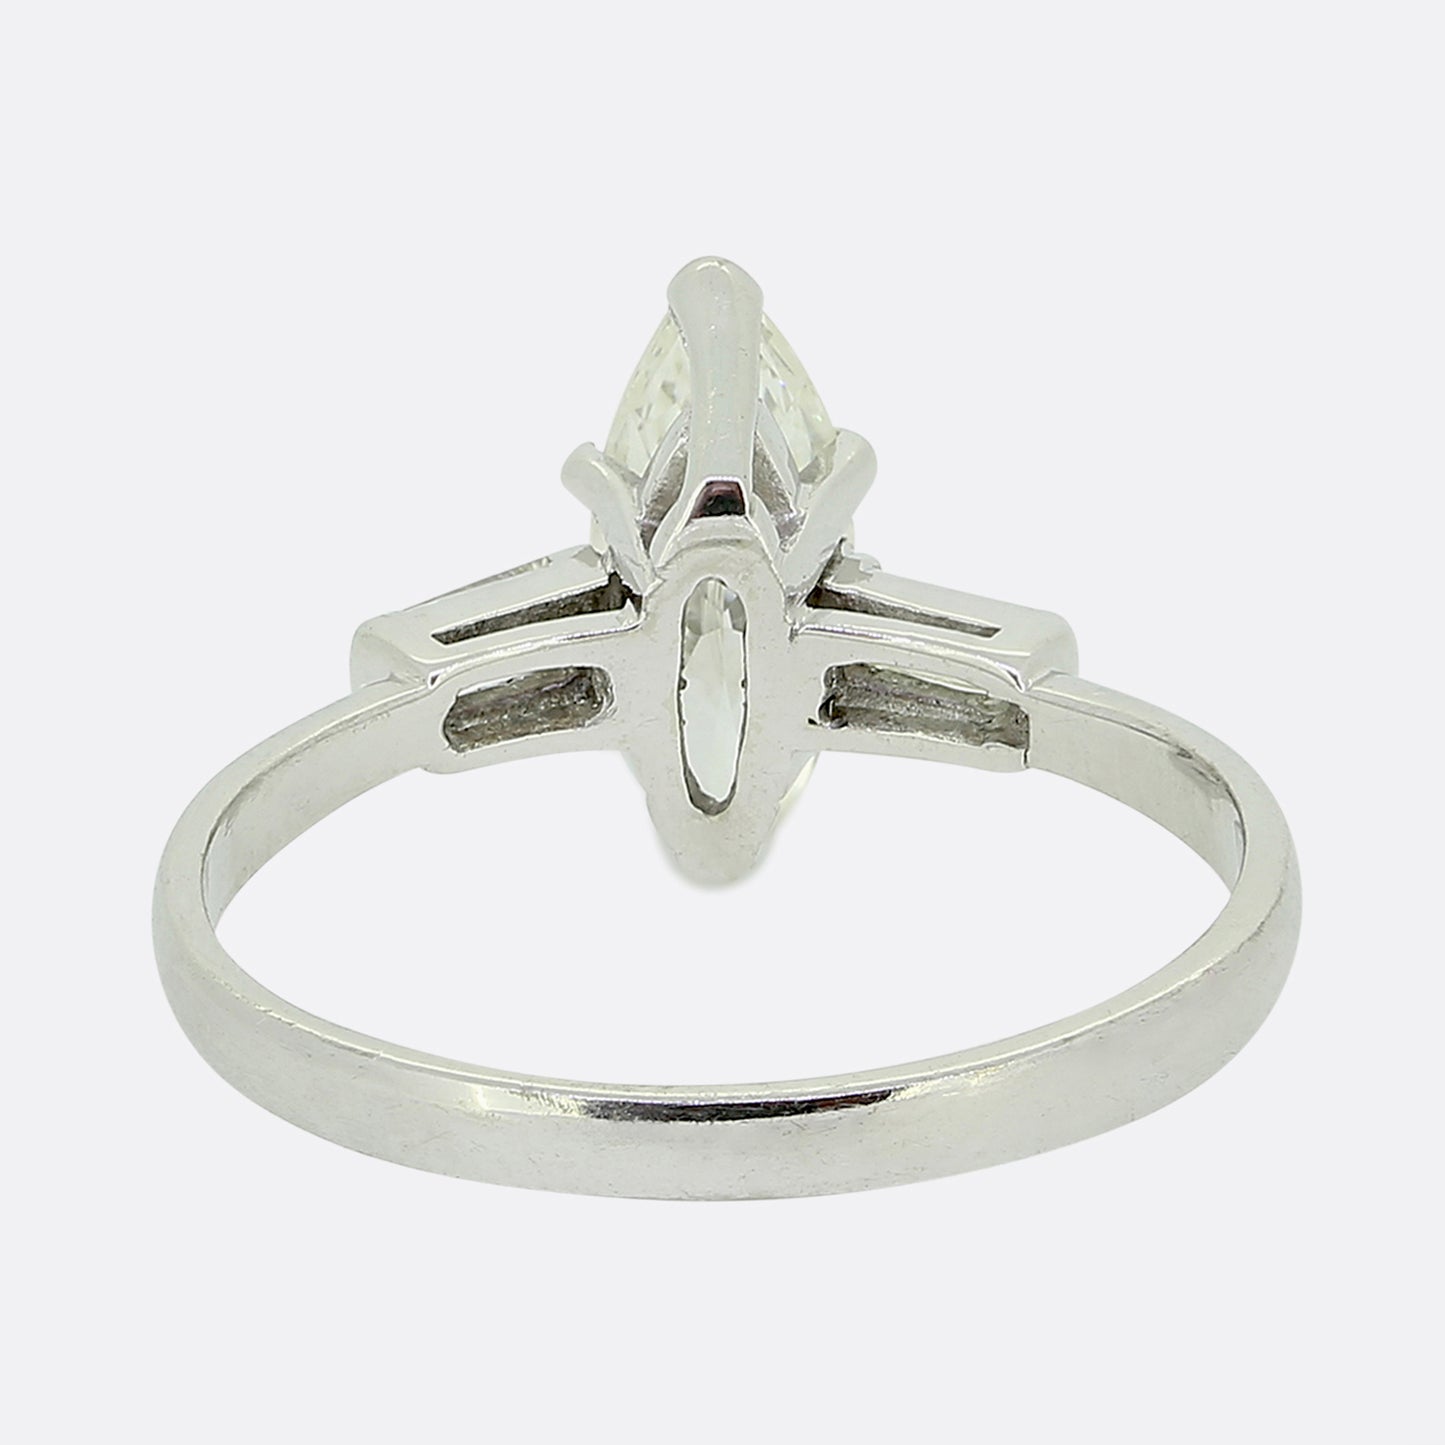 1.00 Carat Marquise Cut Diamond Engagement Ring